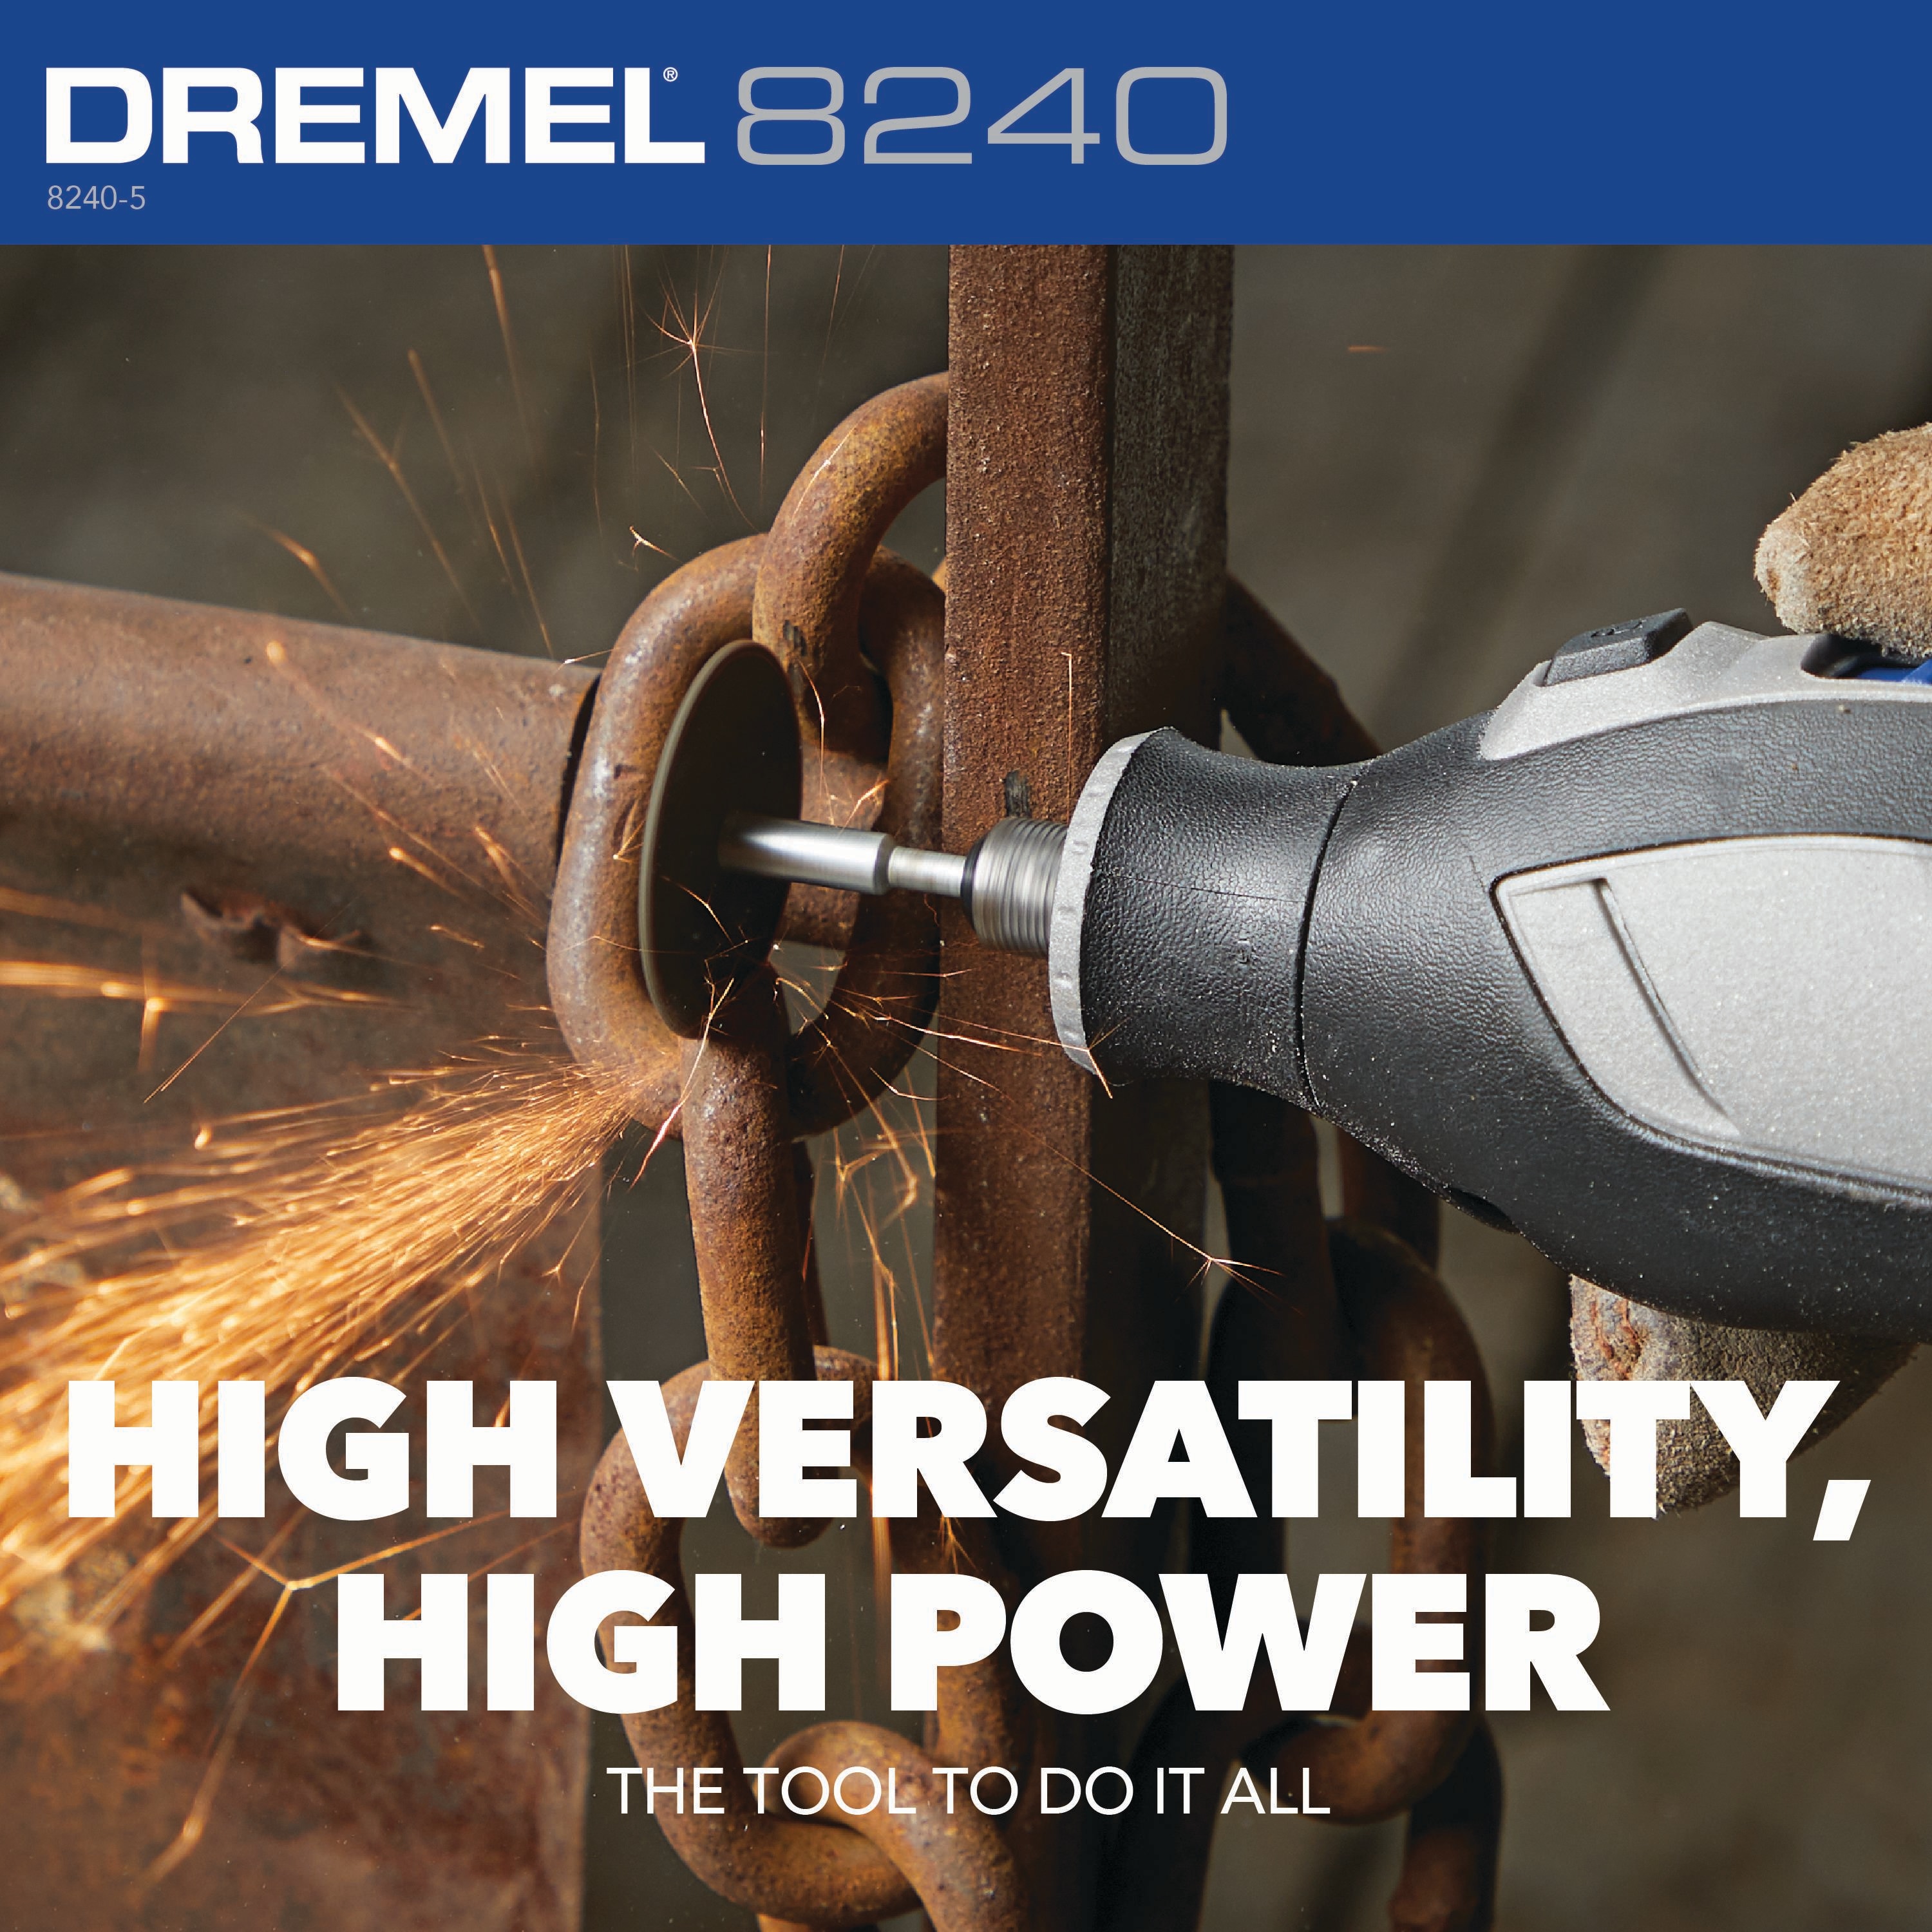 Dremel 4000 Variable Speed Corded 1.6-Amp Multipurpose Rotary Tool Kit